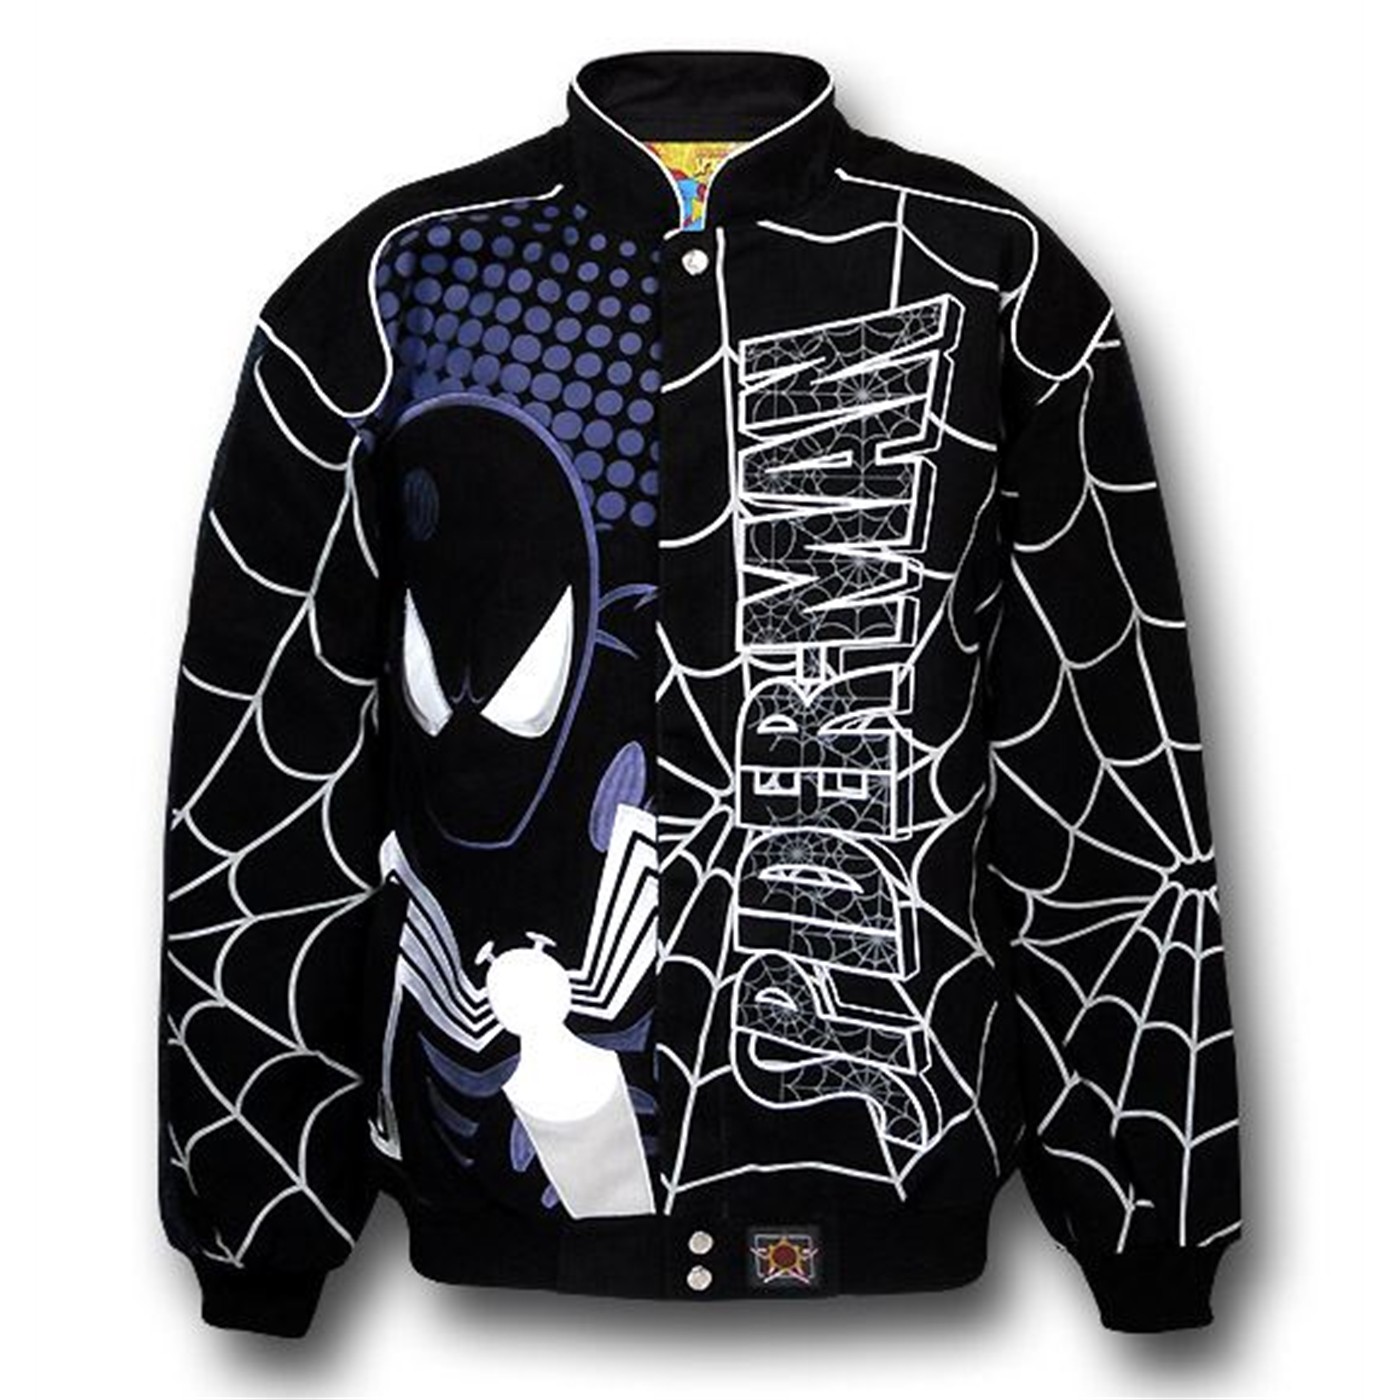 Spiderman Back in Black Twill Jacket